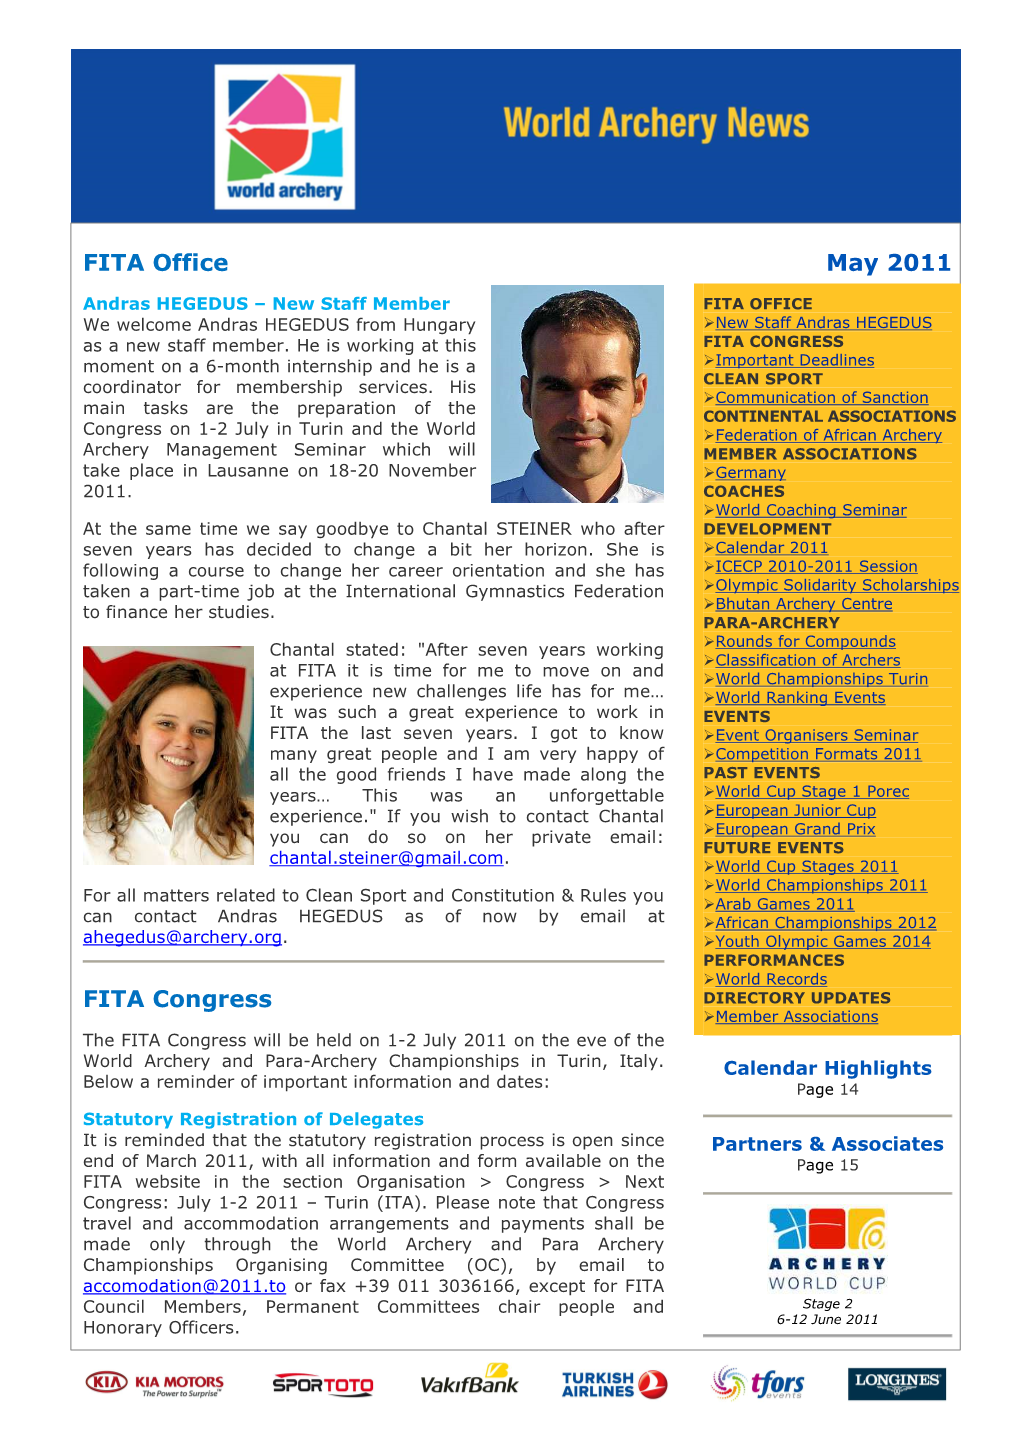 FITA Office FITA Congress May 2011